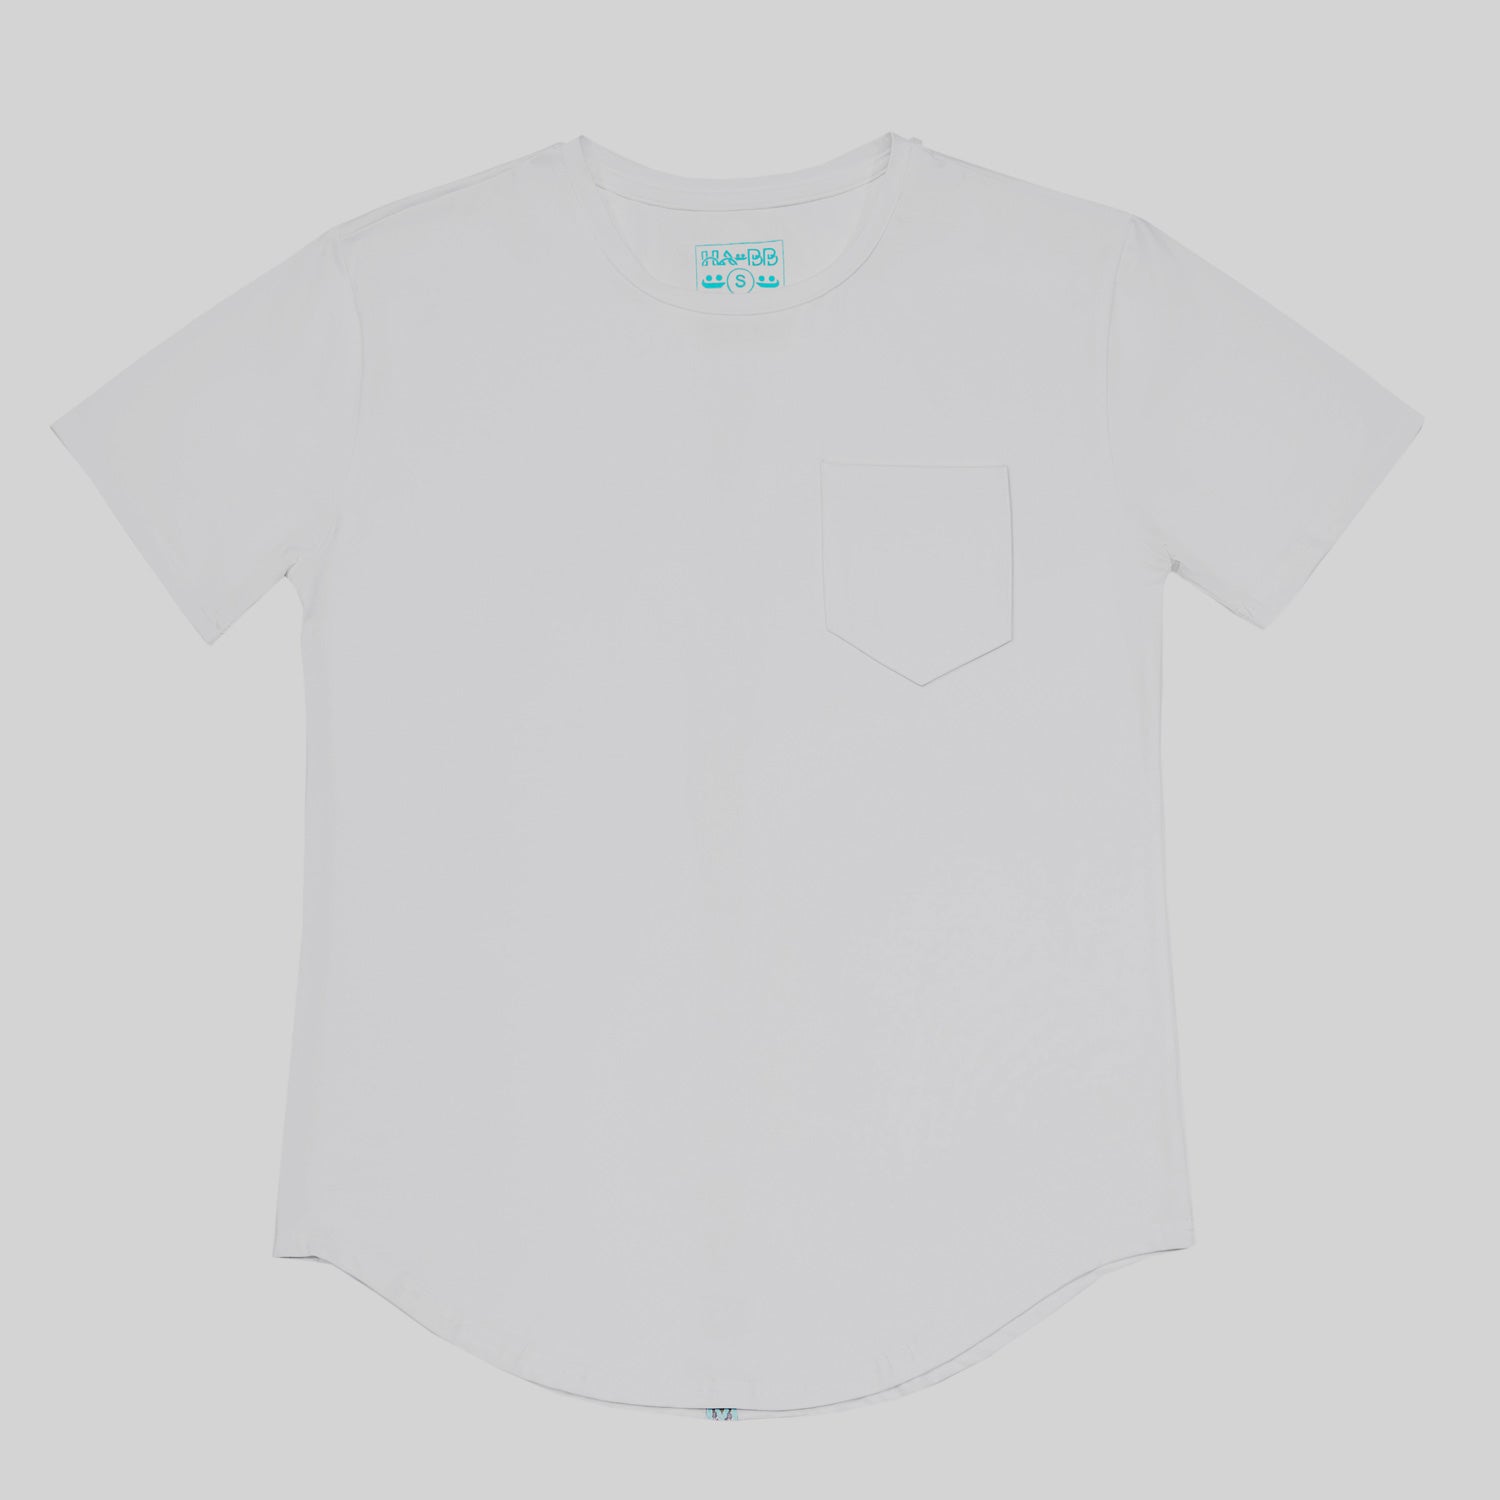 White T-shirt, front pocket, short sleeves, Al Sadu, Print, rounded bottom, modern, Man, front view